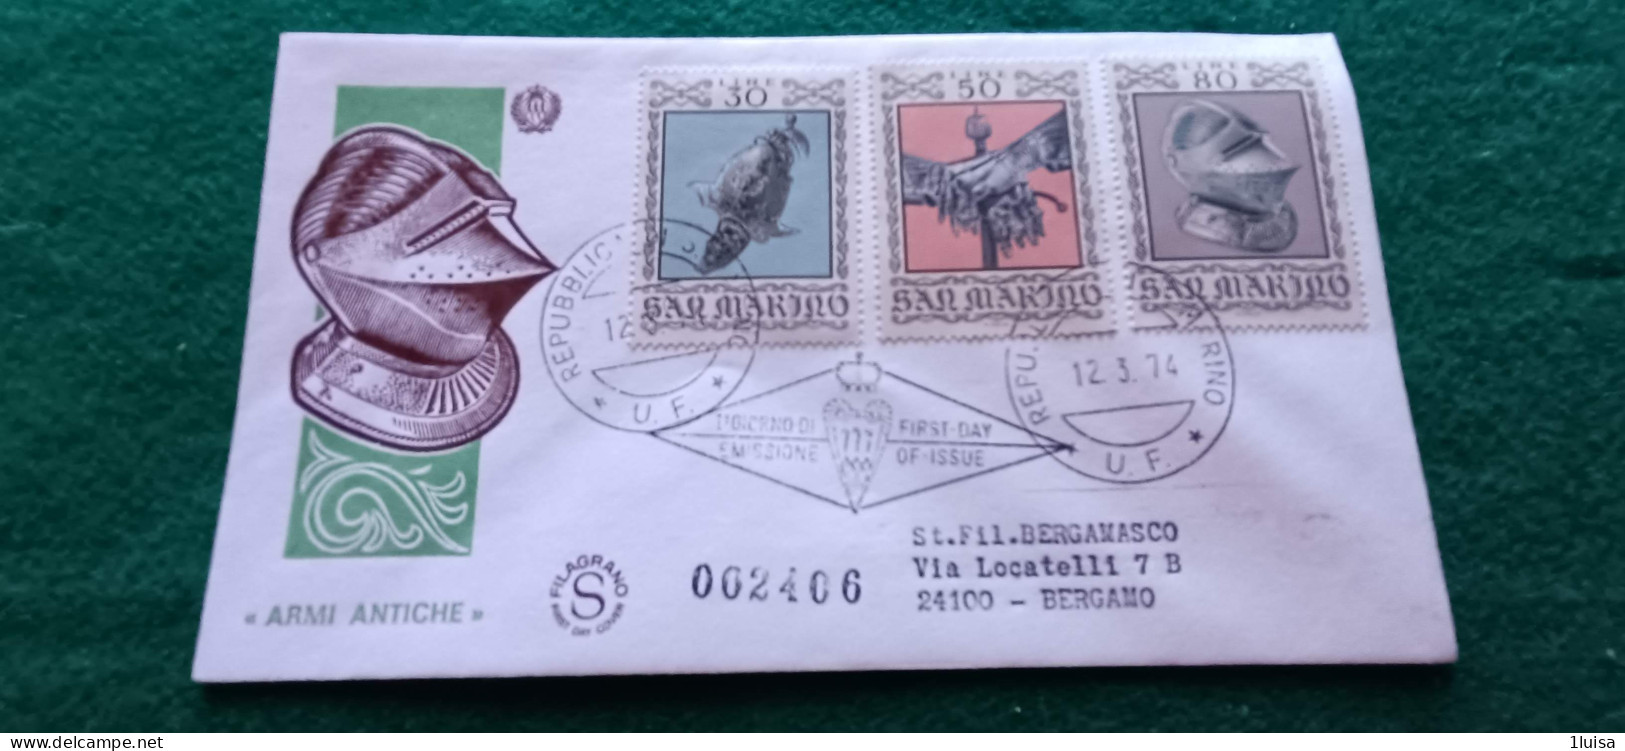 SAN MARINO 12/3/74 Armature Medioevali - Express Letter Stamps